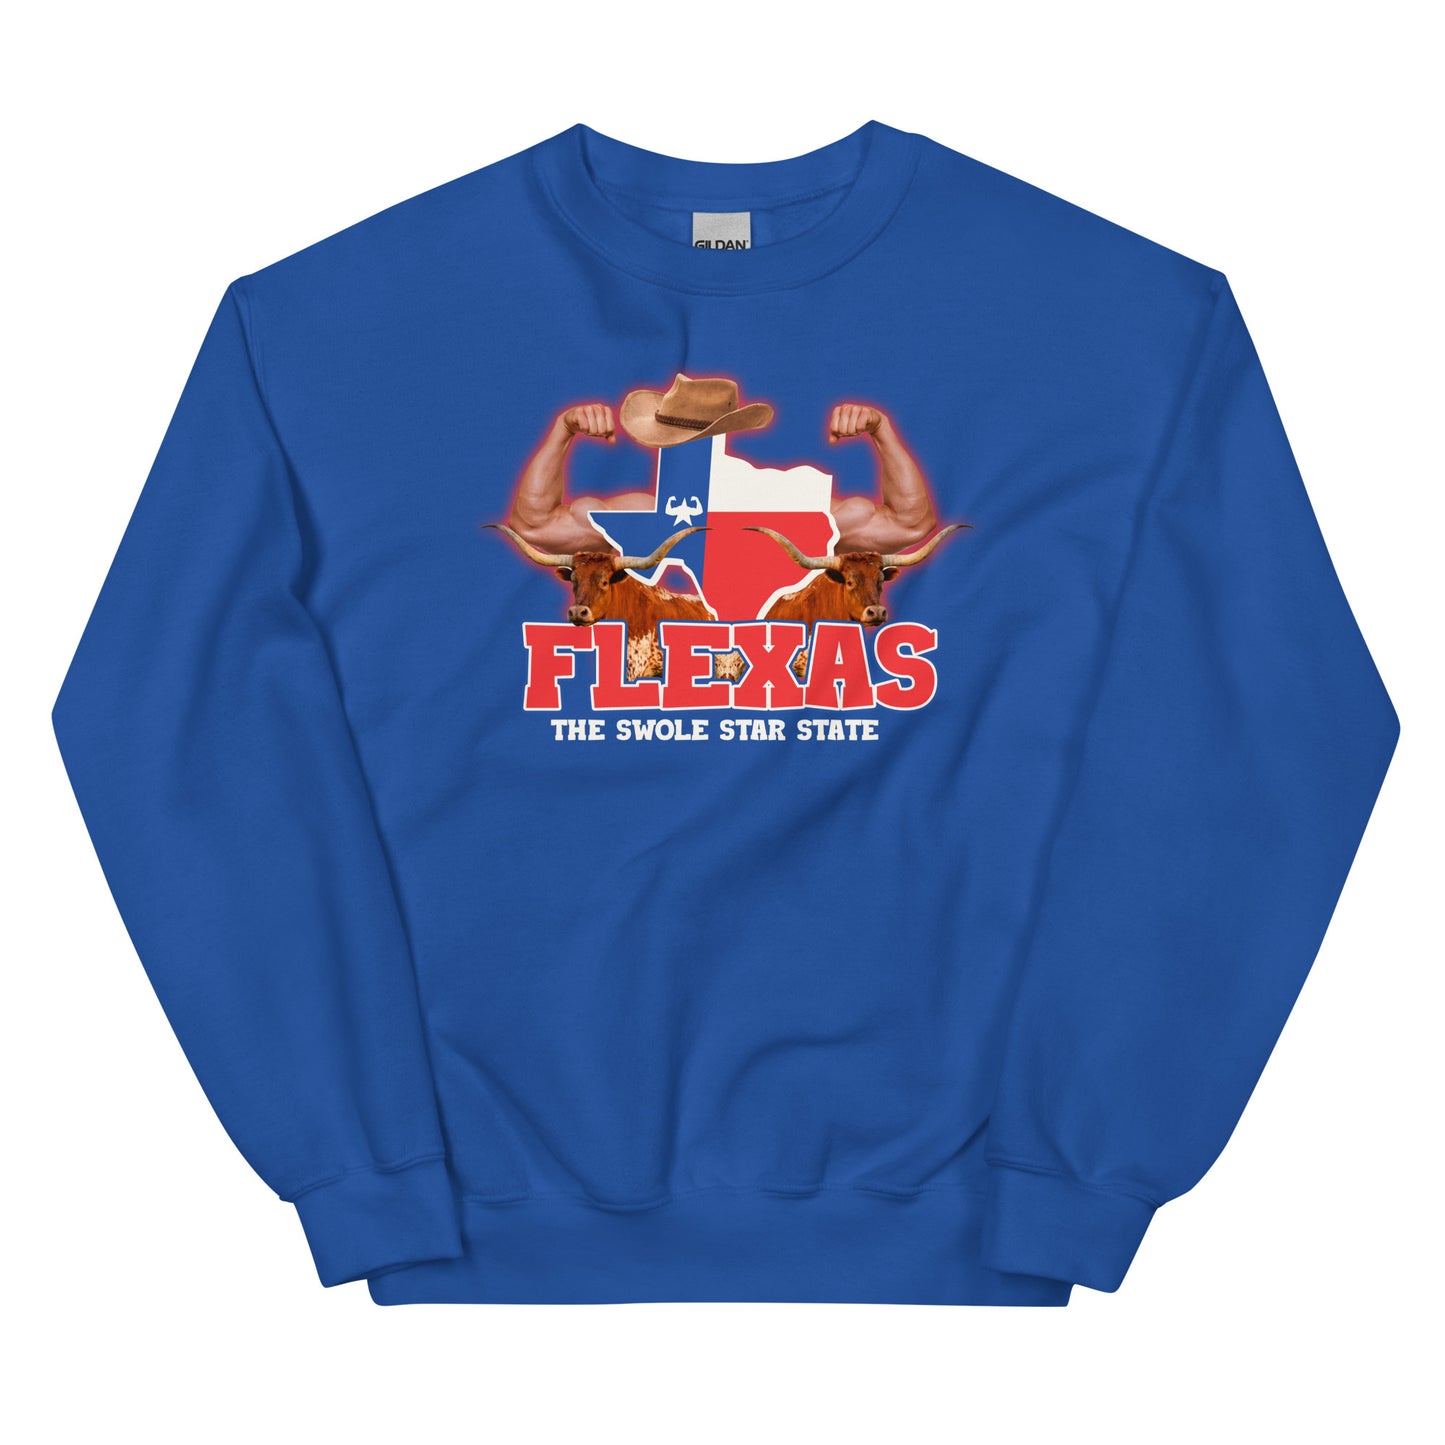 Flexas (The Swole Star State) Unisex Sweatshirt